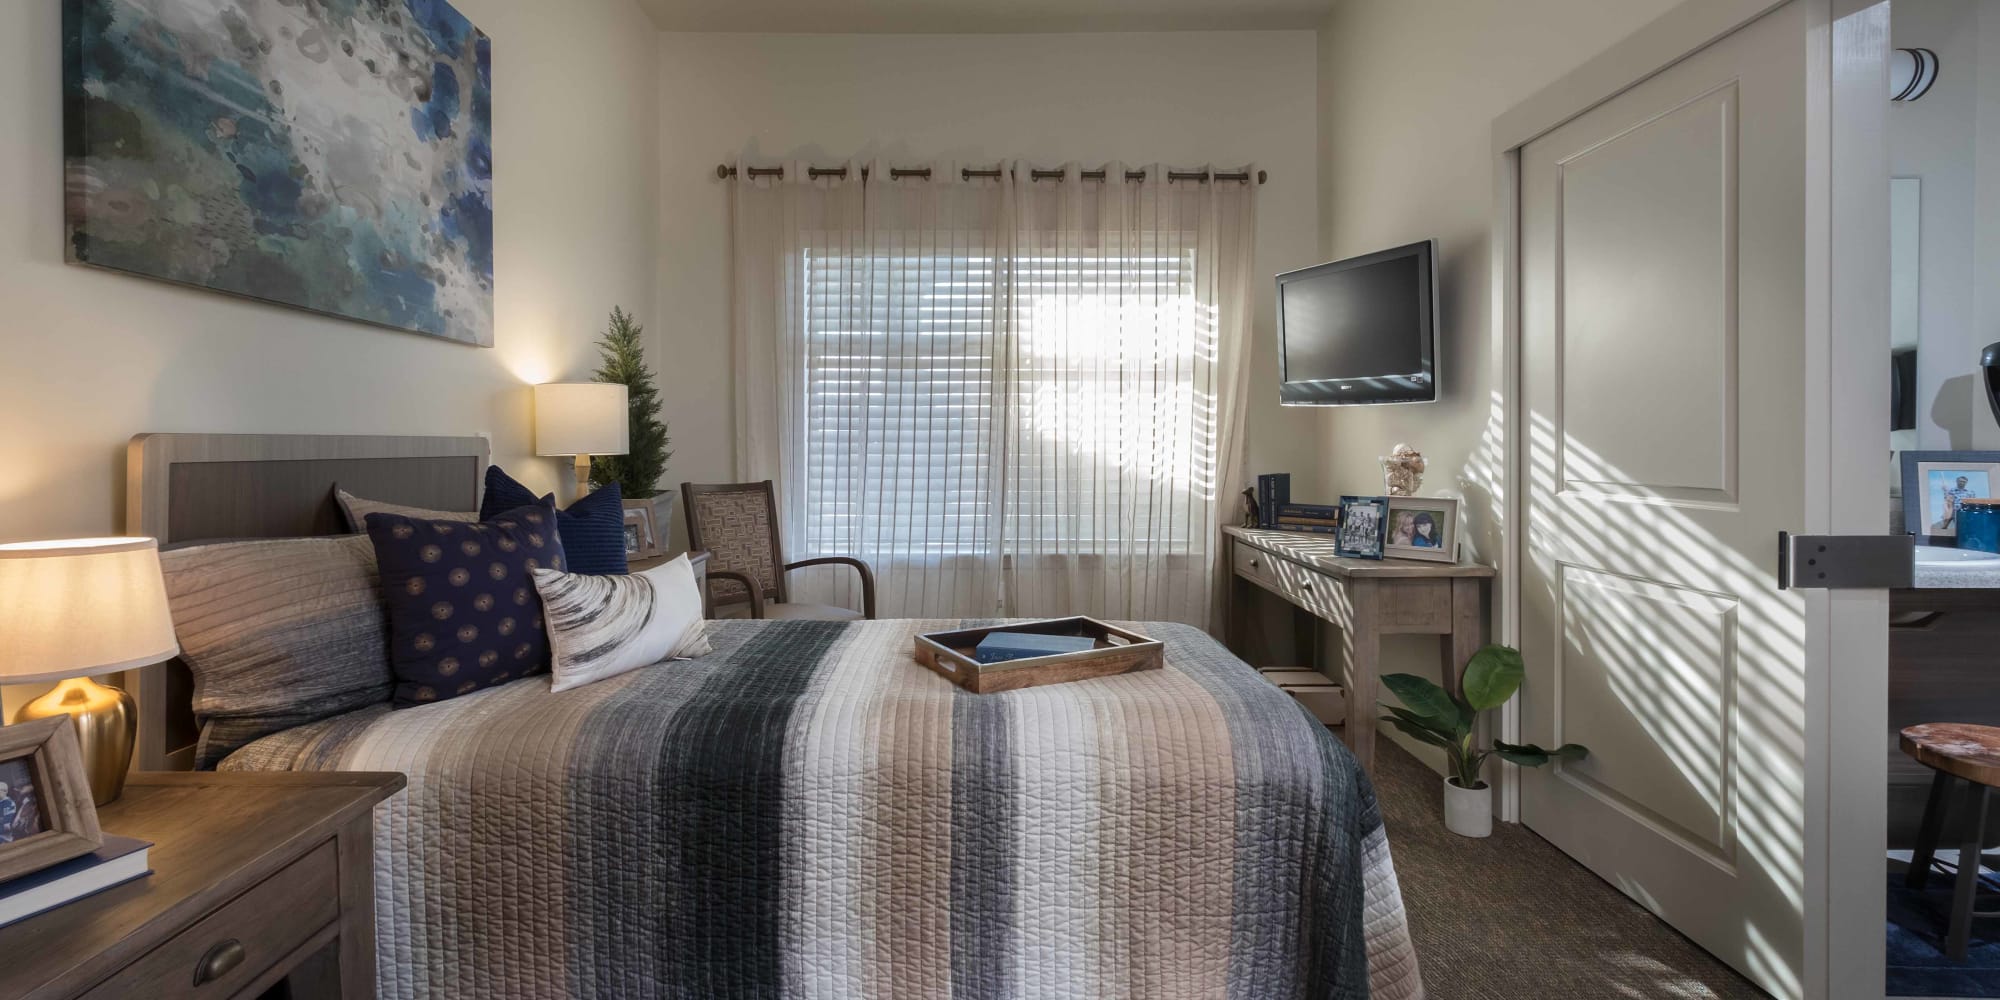 A model bedroom at Avenir Senior Living in Scottsdale, Arizona. 